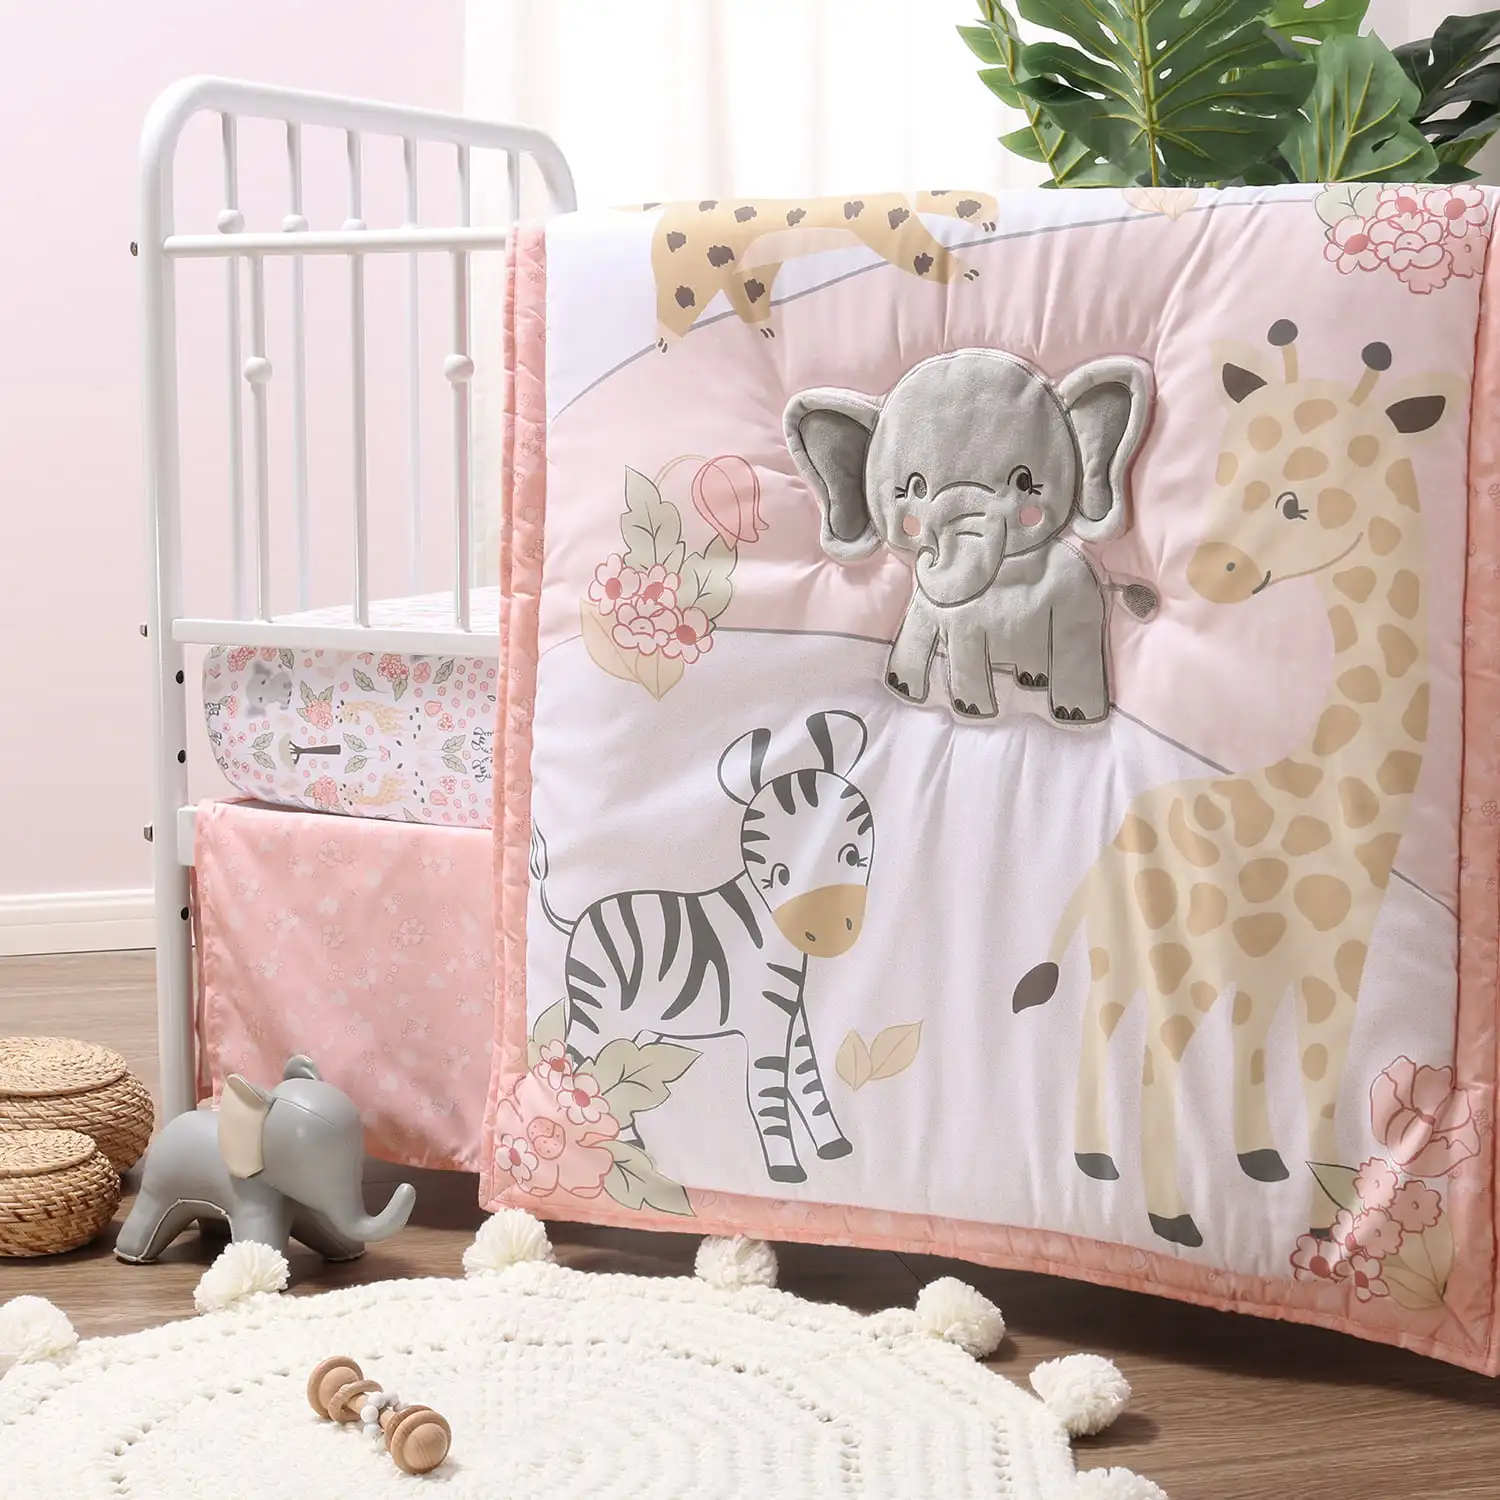 

Pink and Grey Wildest Dreams Crib Bedding Set for Baby Girls, 3 Piece Nursery Set